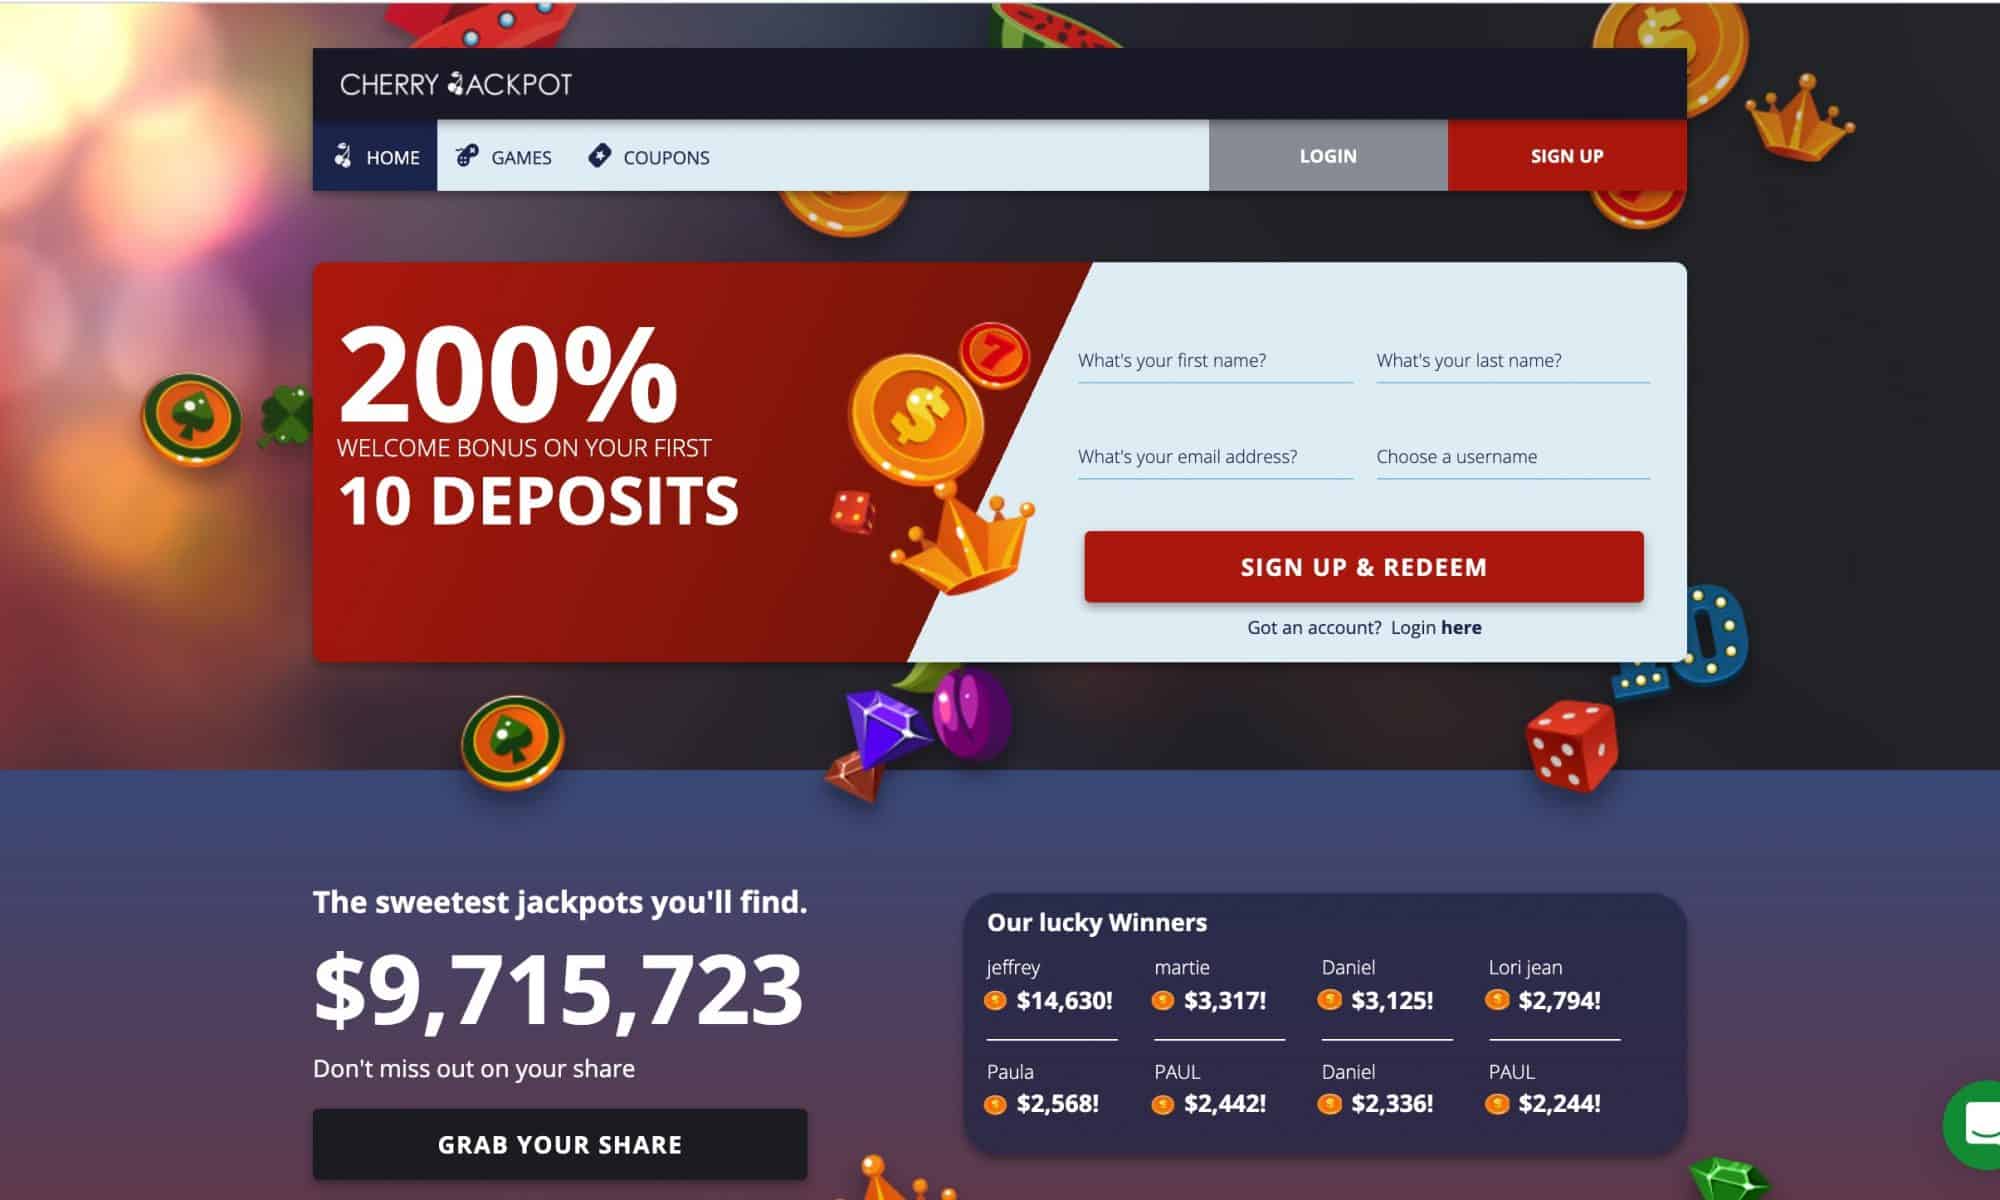 Cherry Jackpot Casino - Claim up to $20,000 in bonuses